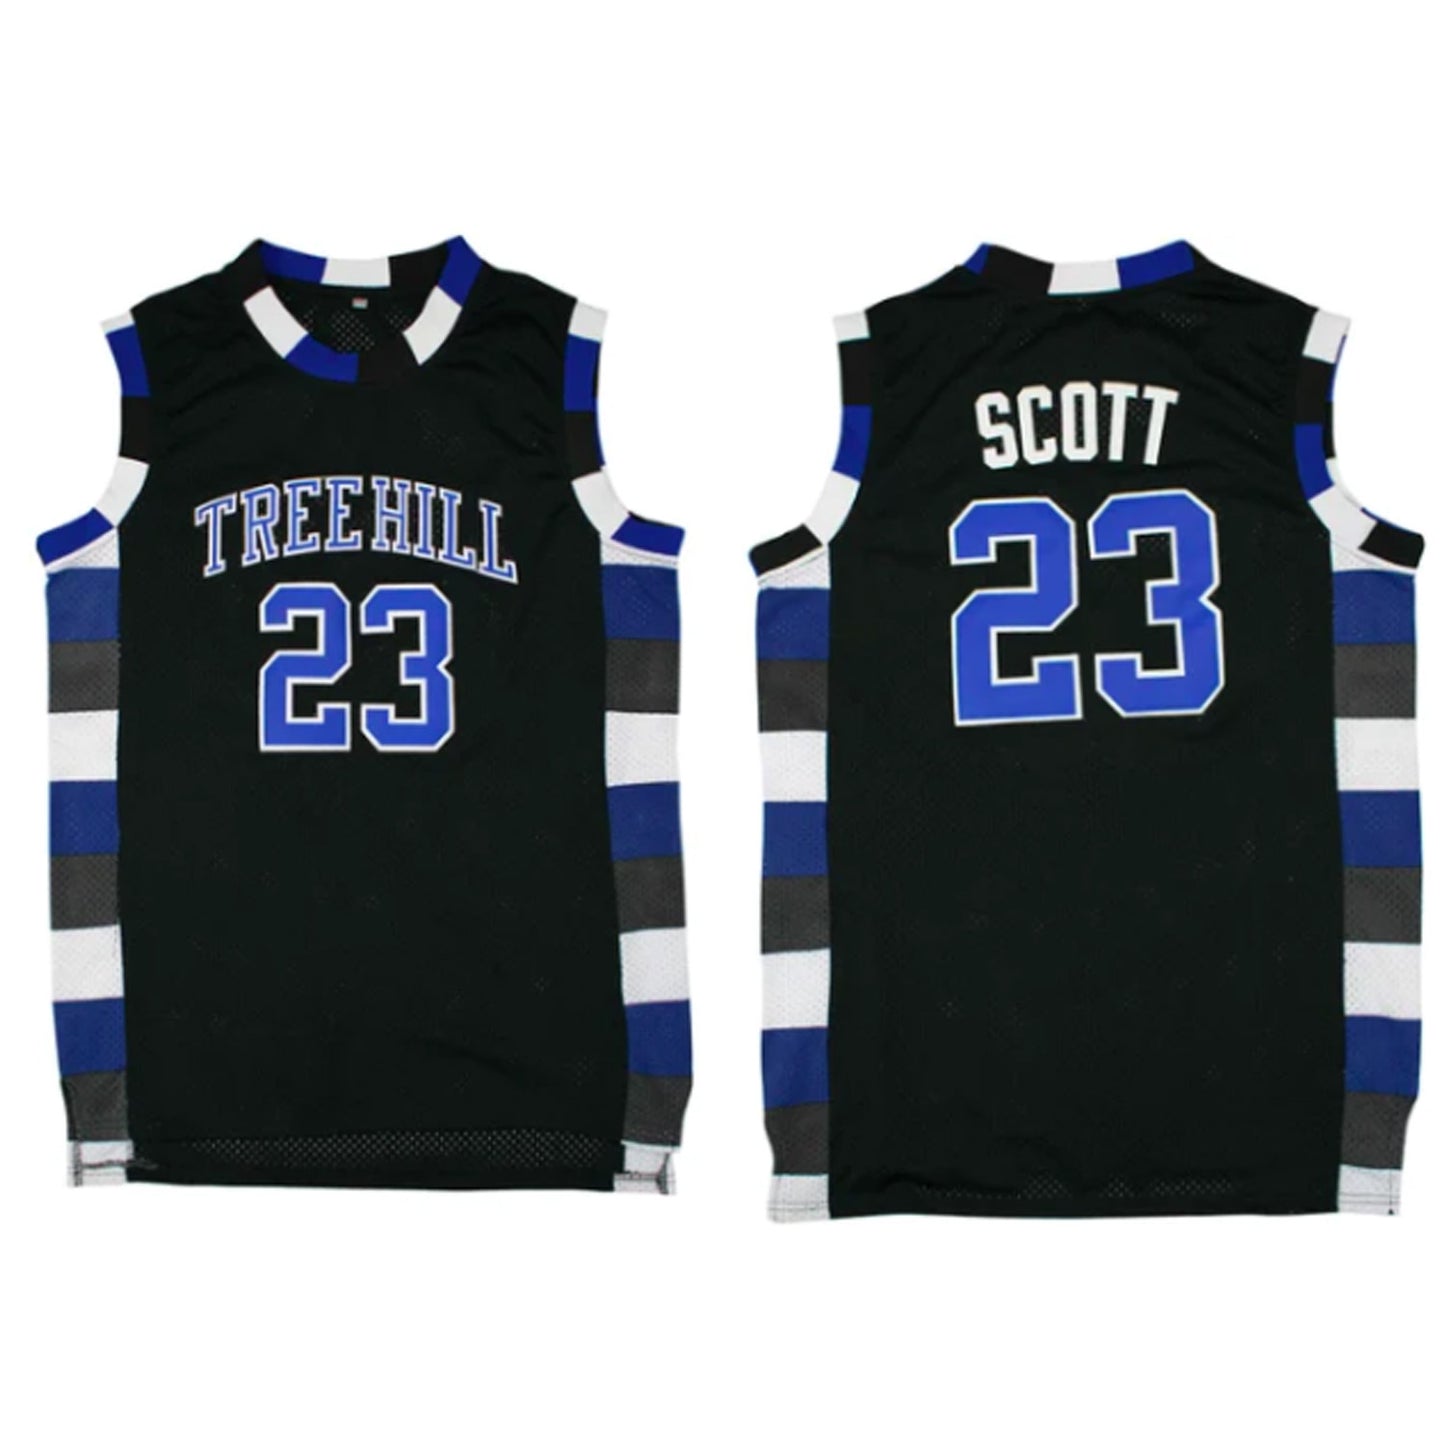 One Tree Hill 'Scott' 23 Jersey